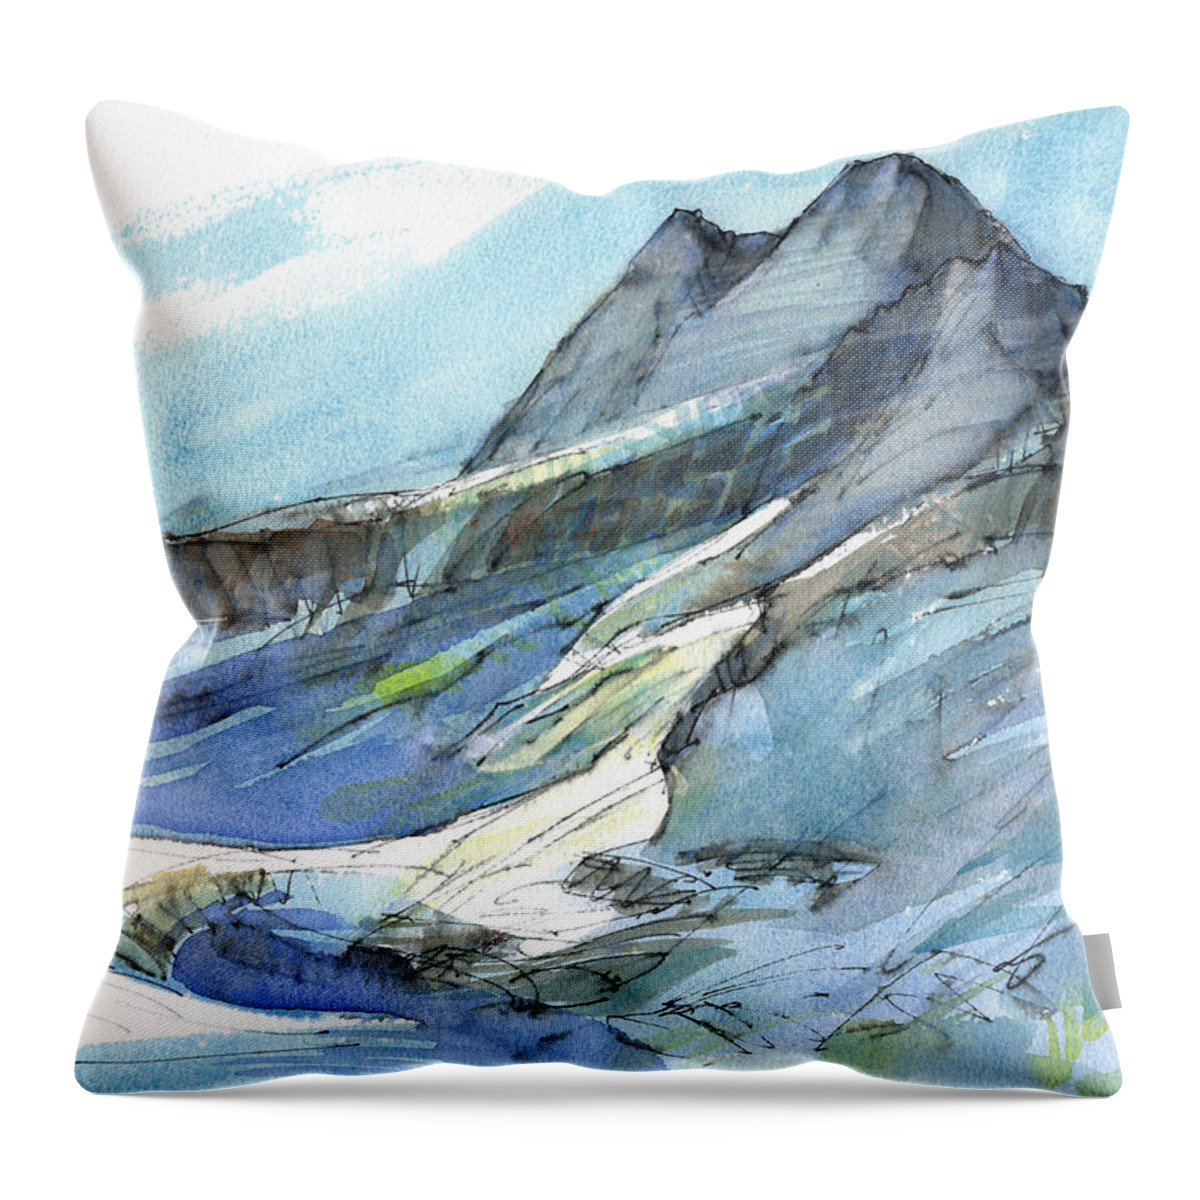 Landscape Throw Pillow featuring the painting Schreckhorn von First by Judith Kunzle